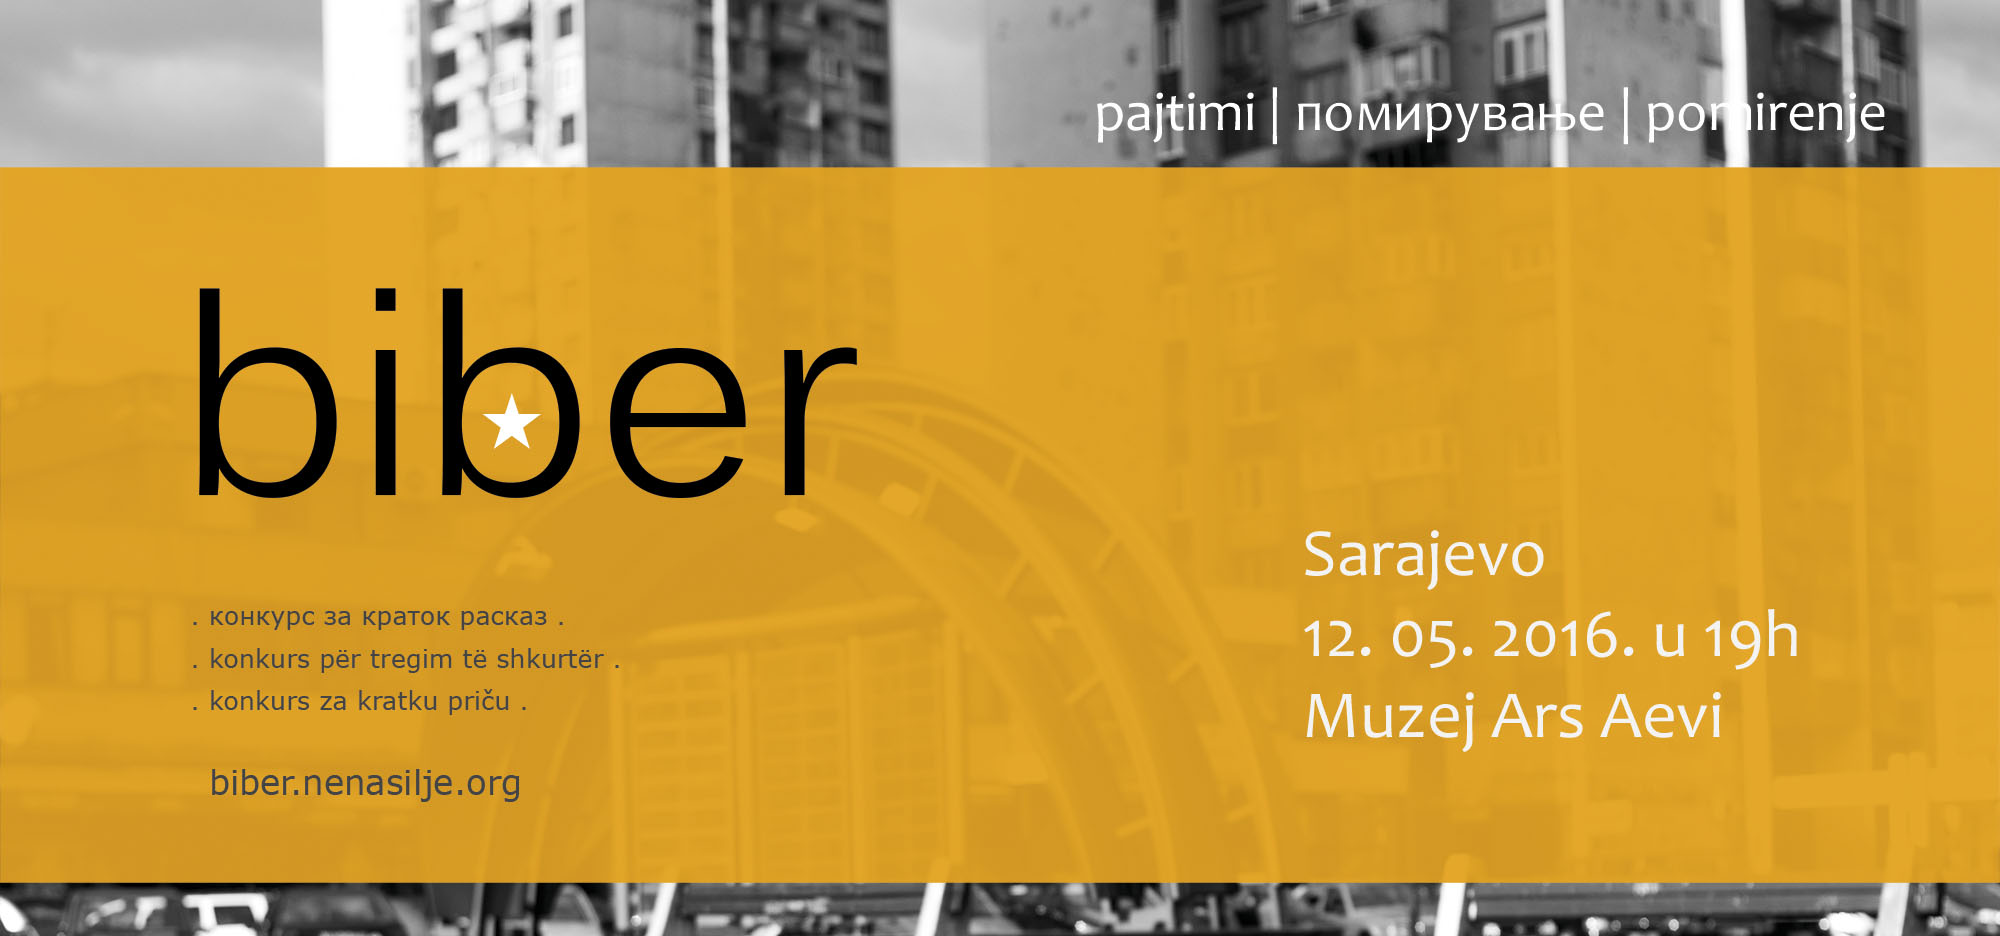 Promotions of Biber stories in Sarajevo, Belgrade and Skopje